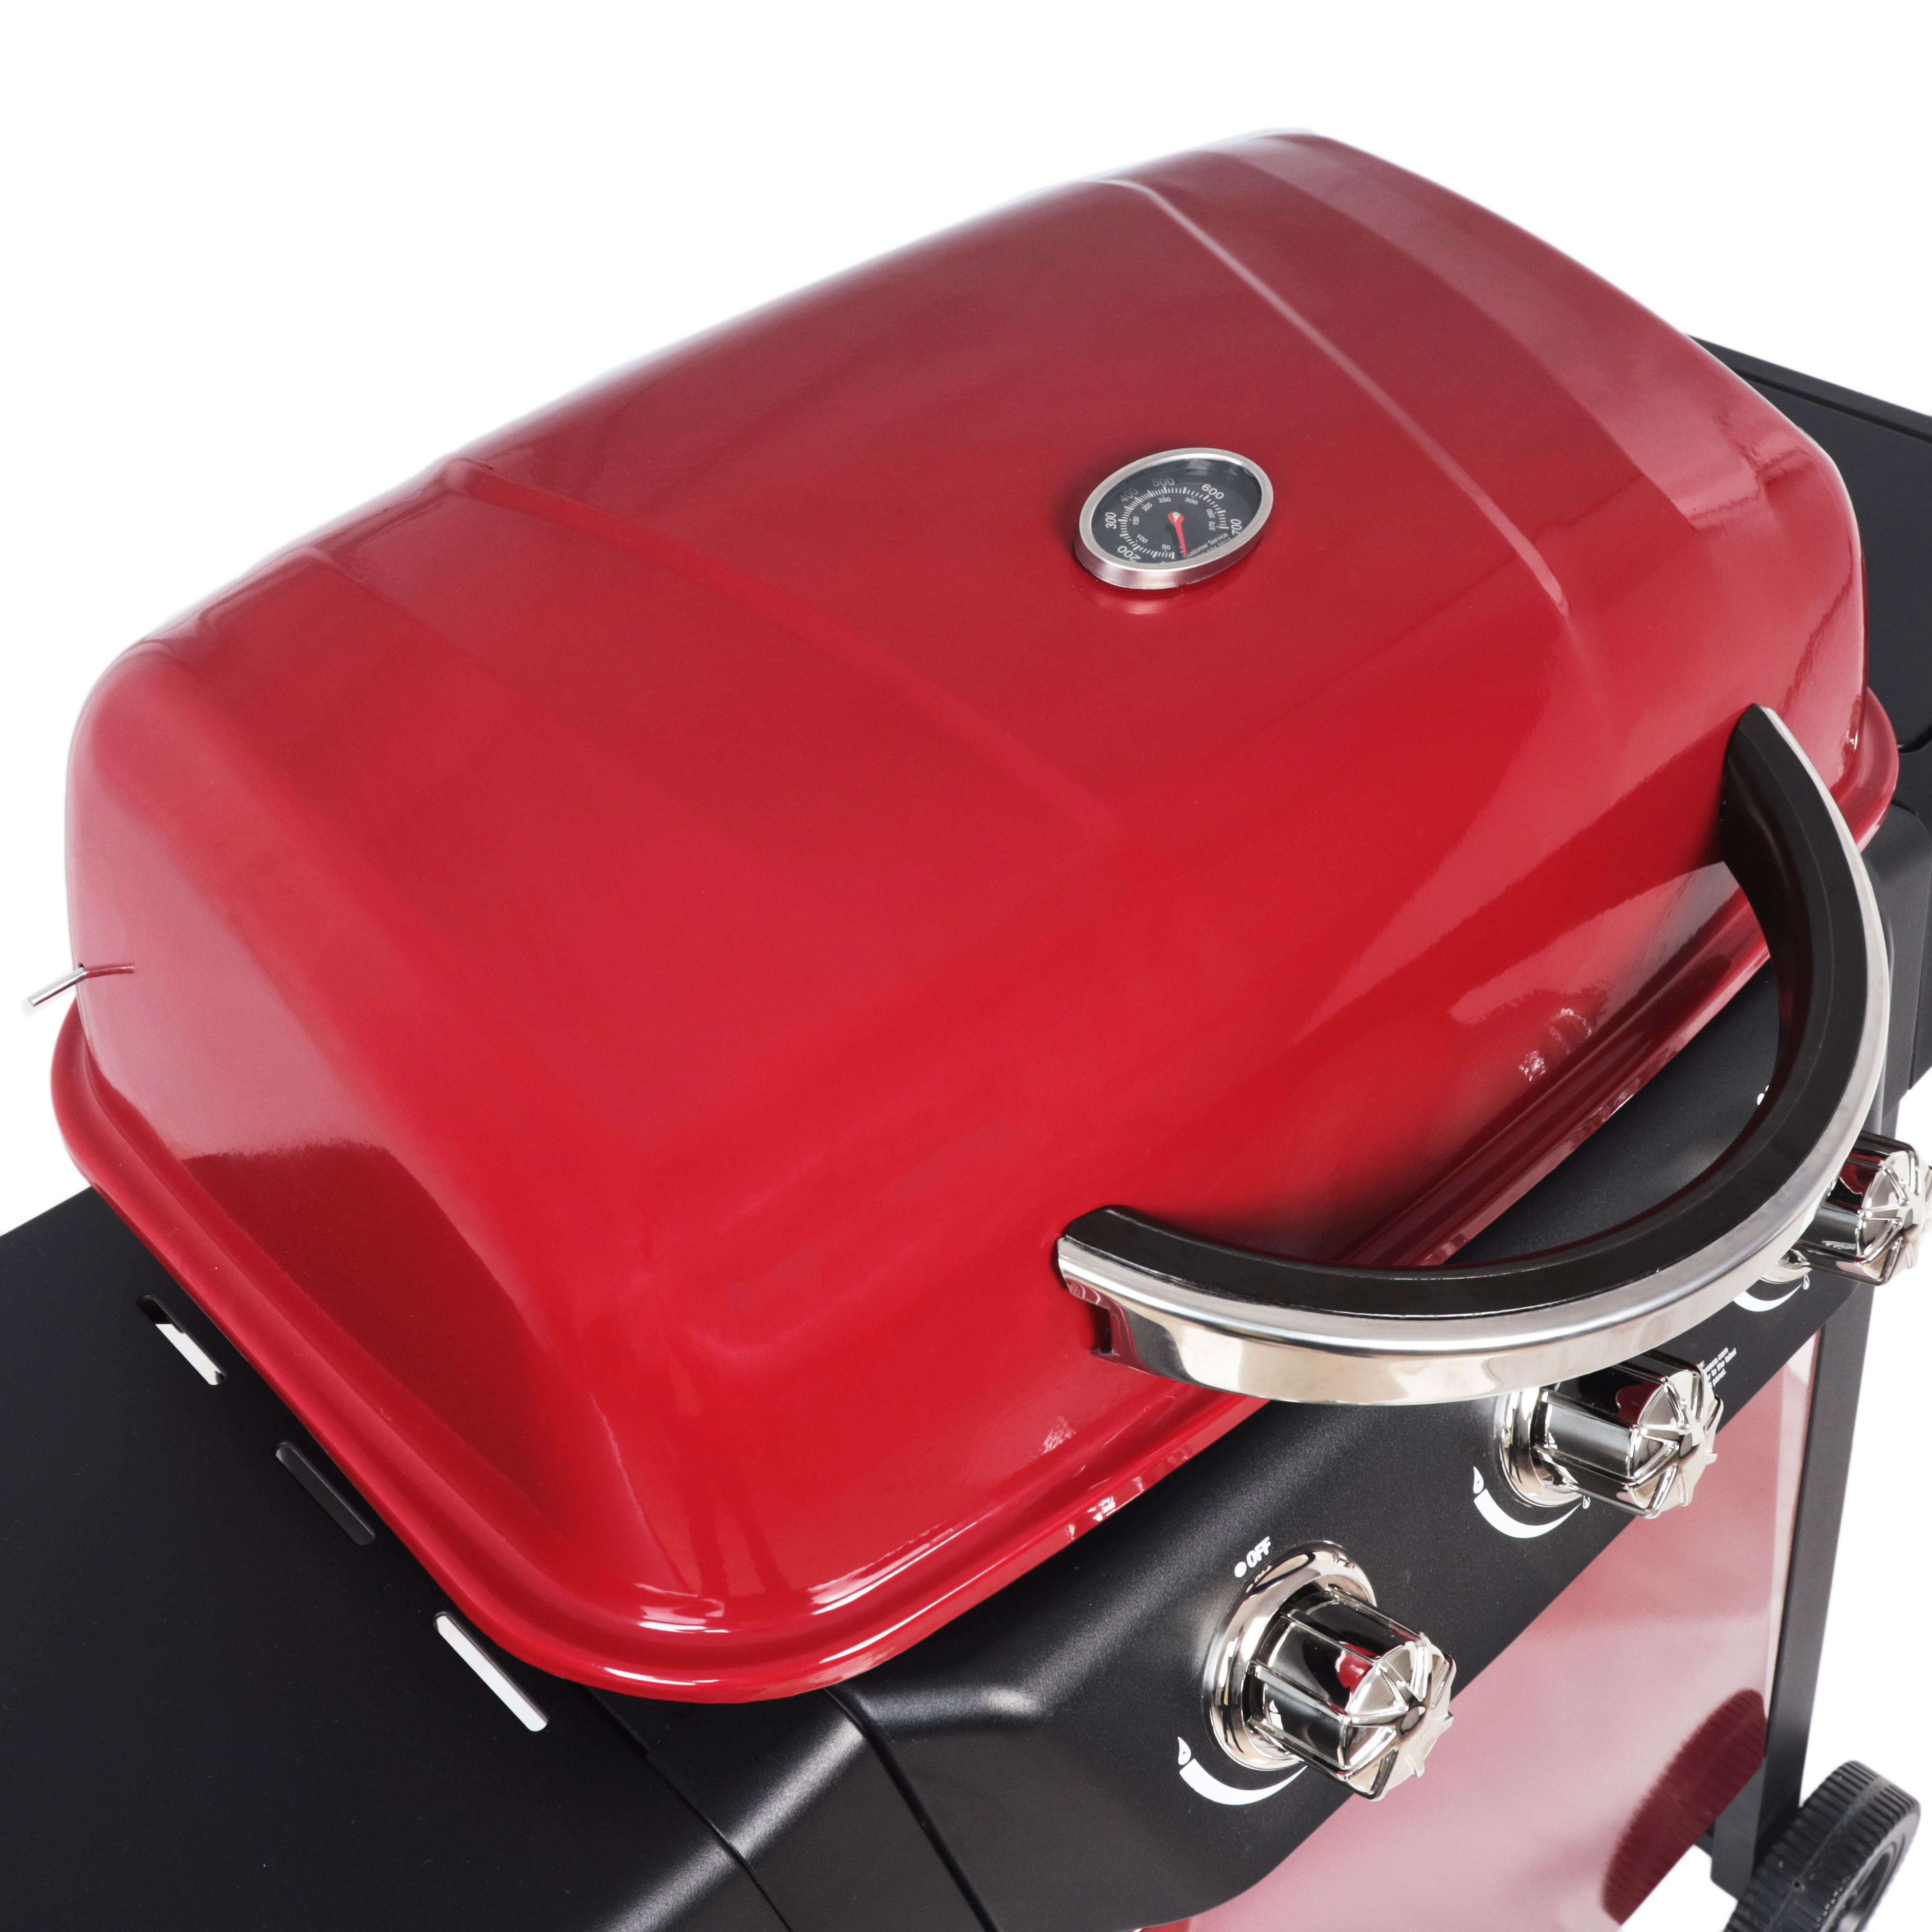 RevoAce 4 Burner Propane Gas Grill Including a Side Burner, Red Sedona, GBC1729WRS - image 3 of 18